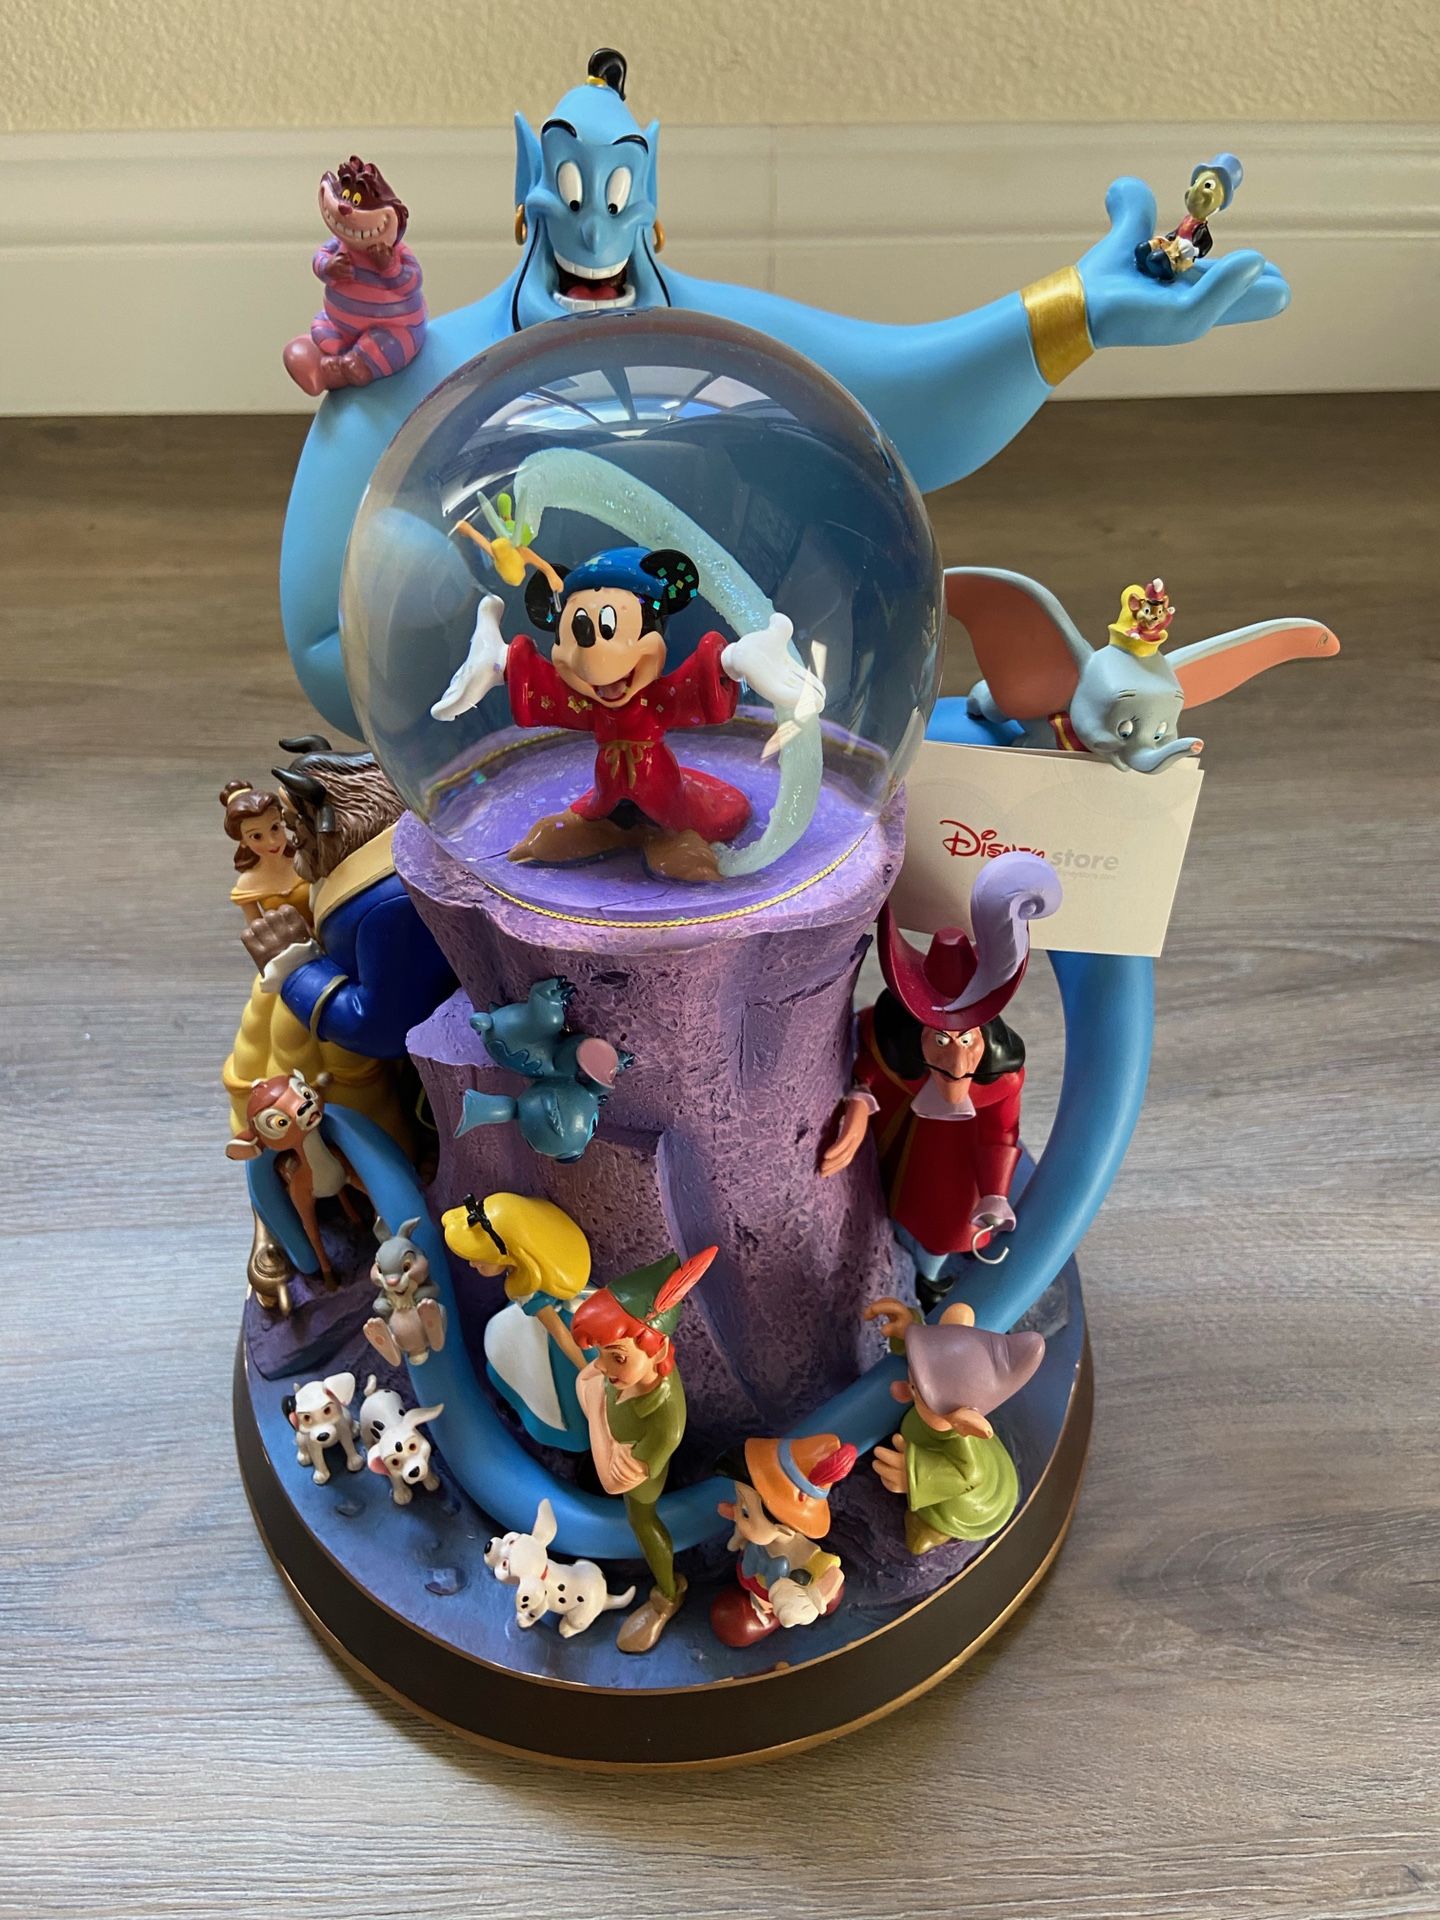 Wonderful World of Disney Snow globe - Perfect Disney Collector’s Gift